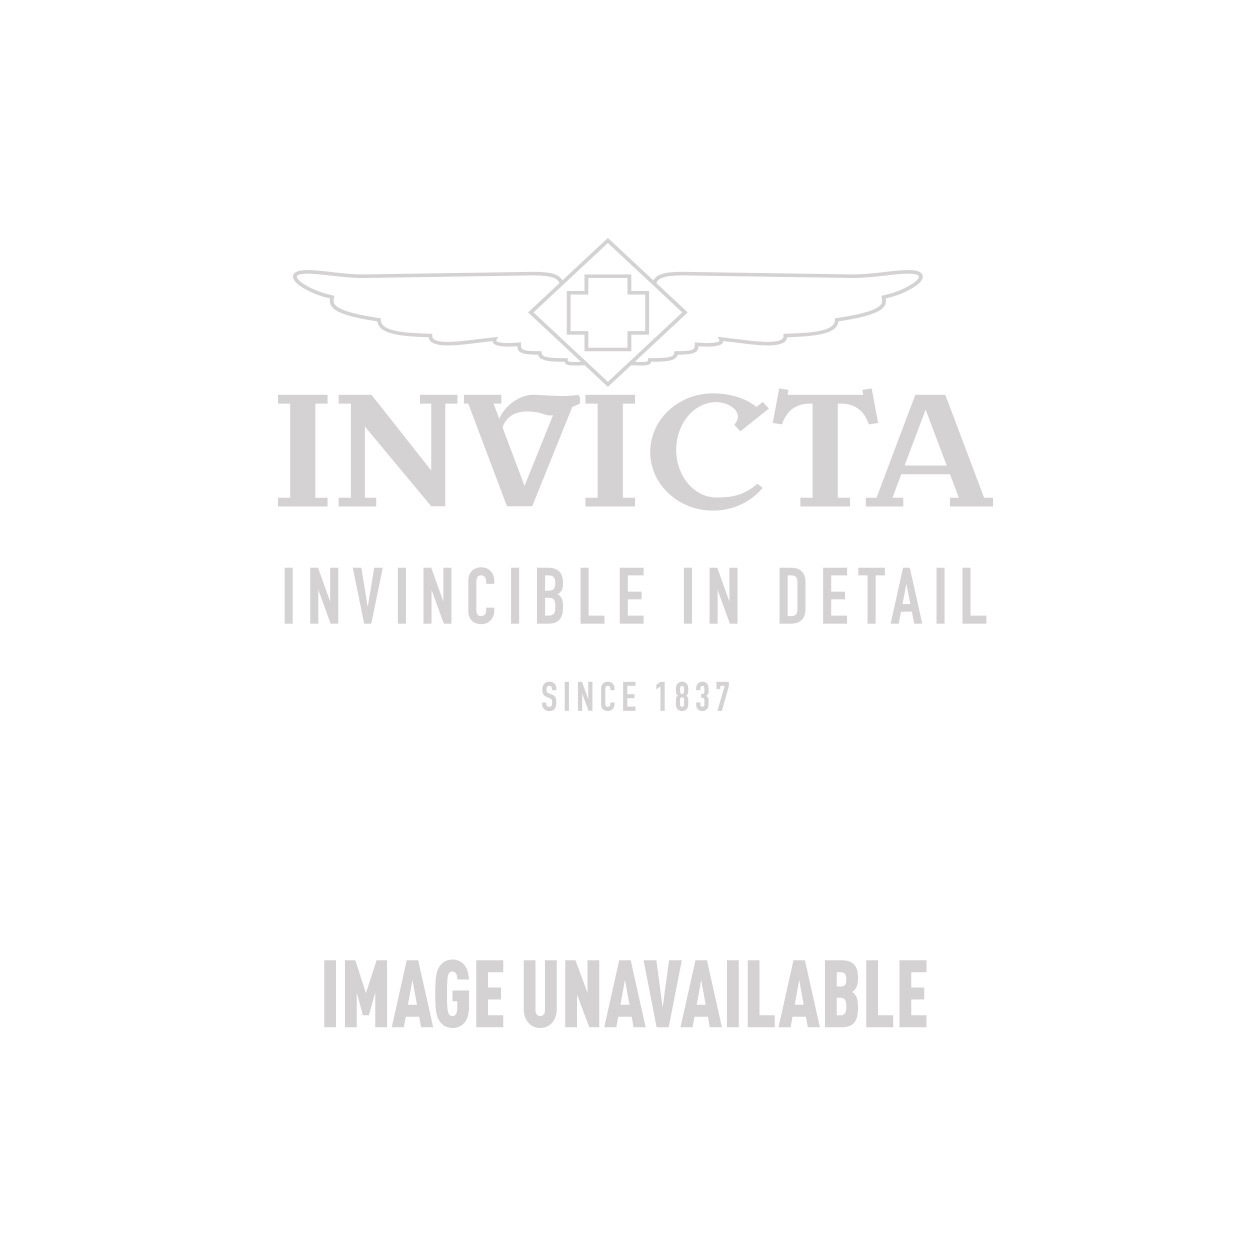 Invicta Pro Diver SCUBA Swiss Movement Quartz Stainless Steel - Model 6981